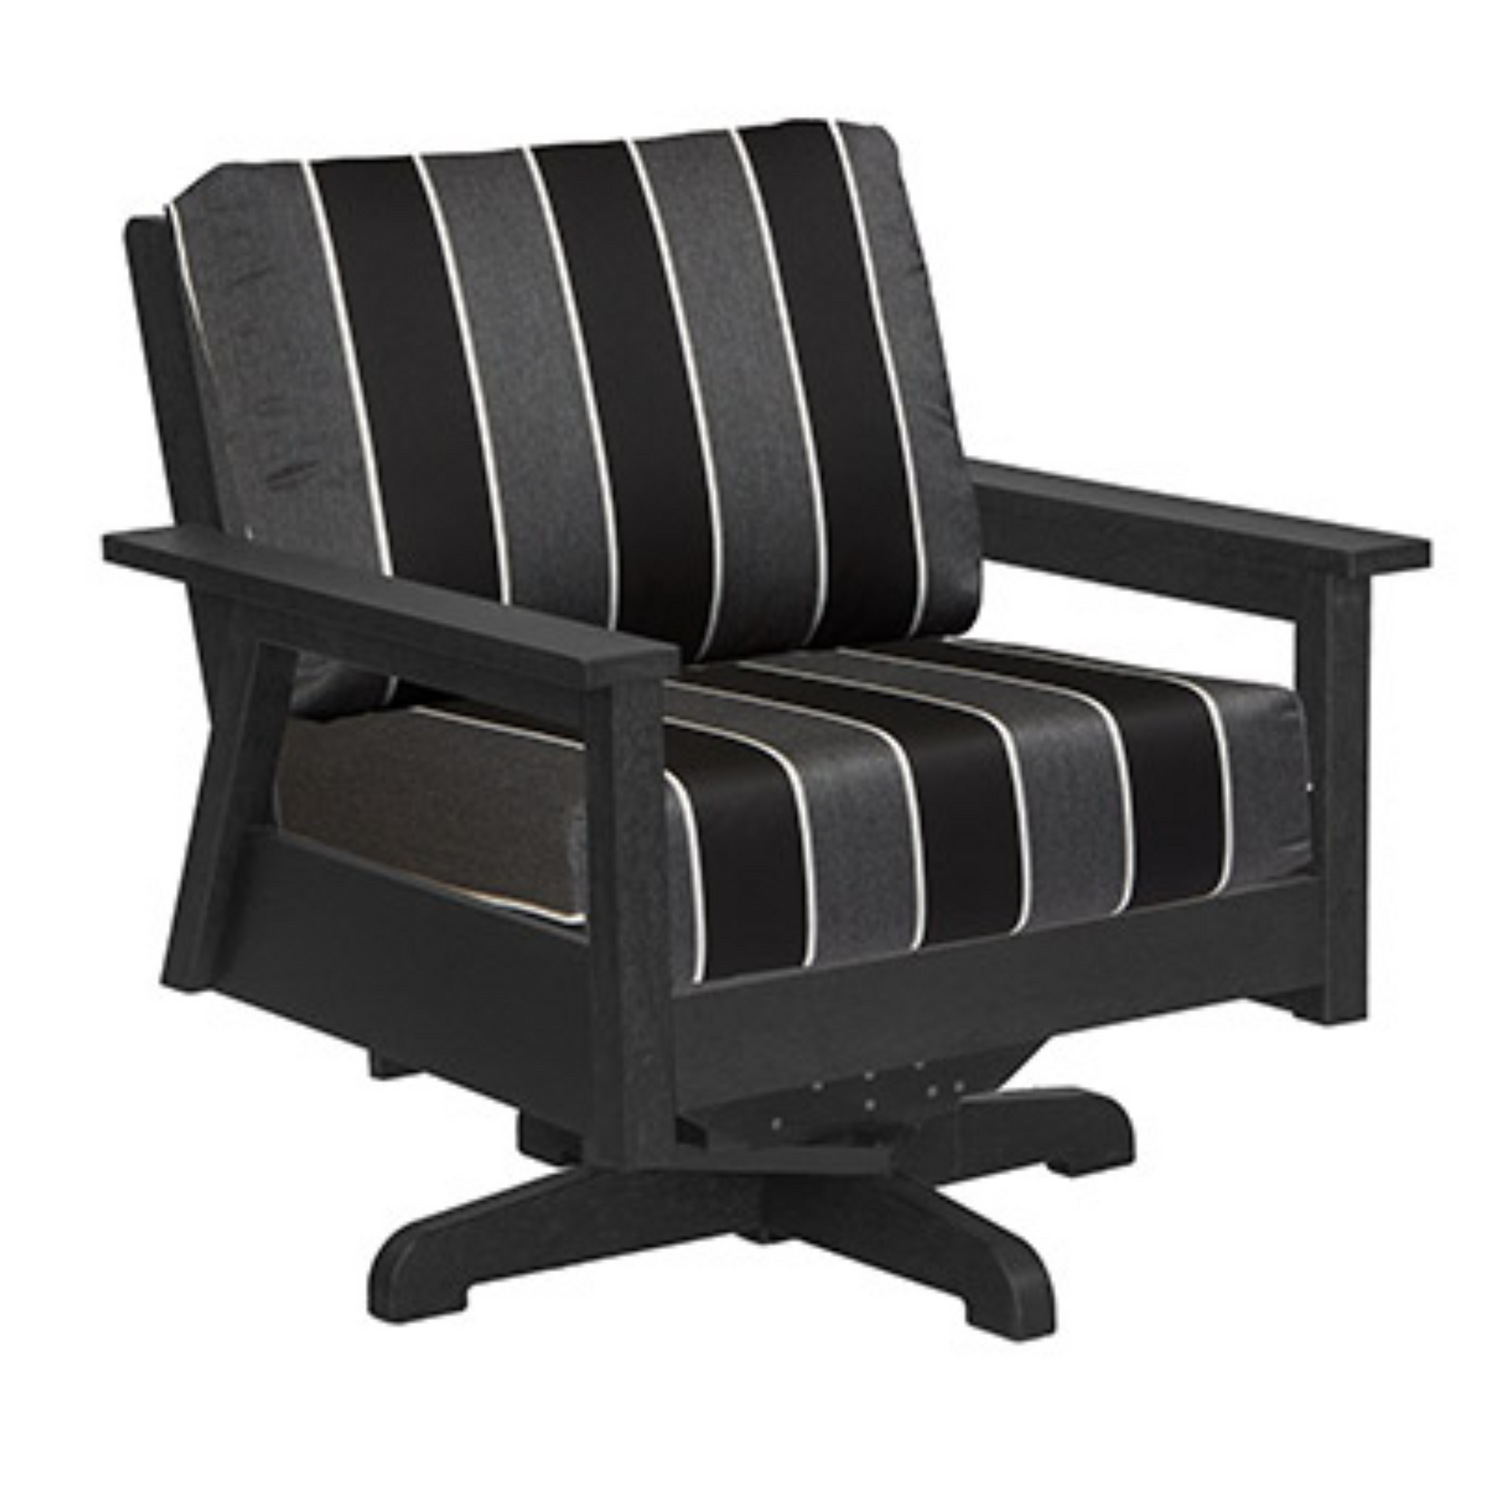 C.R.P. Tofino Swivel Chair in Frame Colour Black and Cushion Colour Peyton Granite